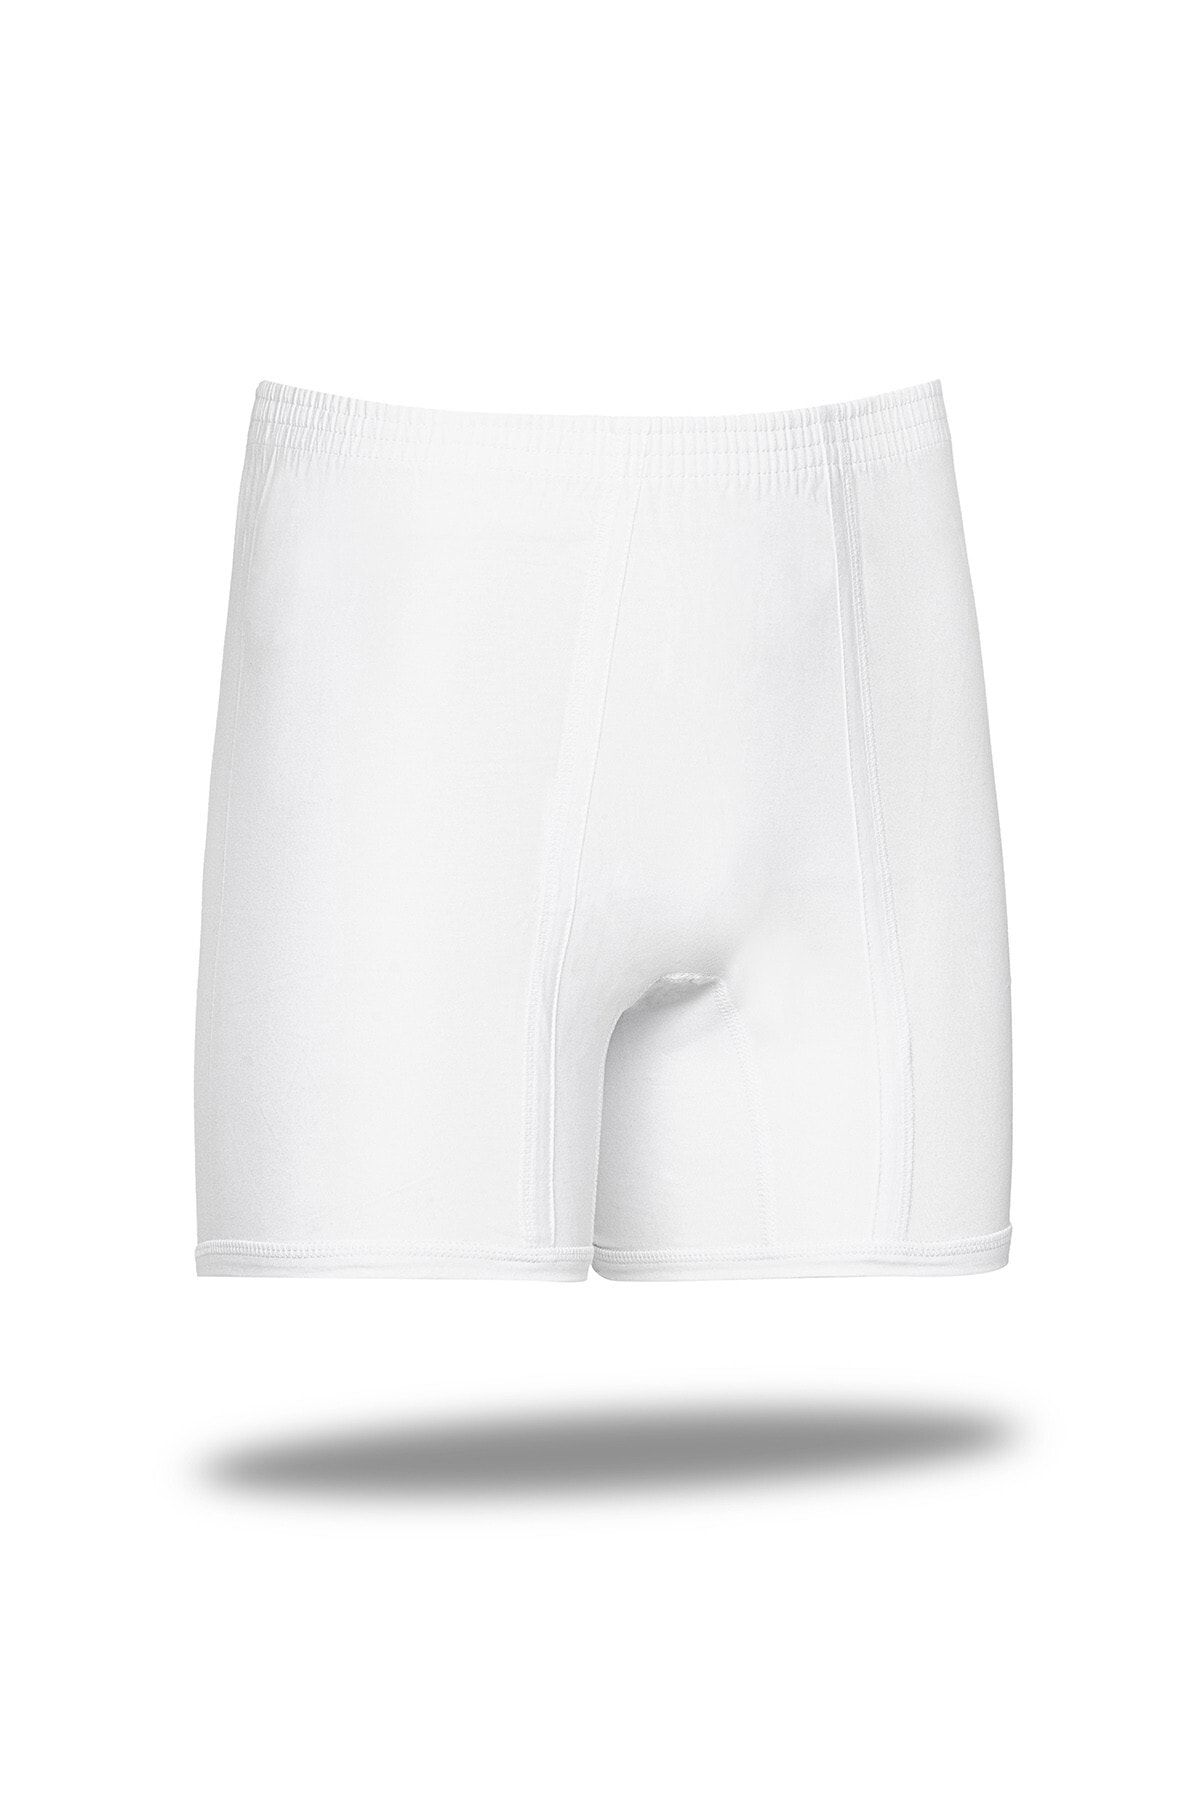 Anıt 10 Pieces, Short Women's Cotton Boxers 92% Cotton, 8% Elastane White -  Trendyol